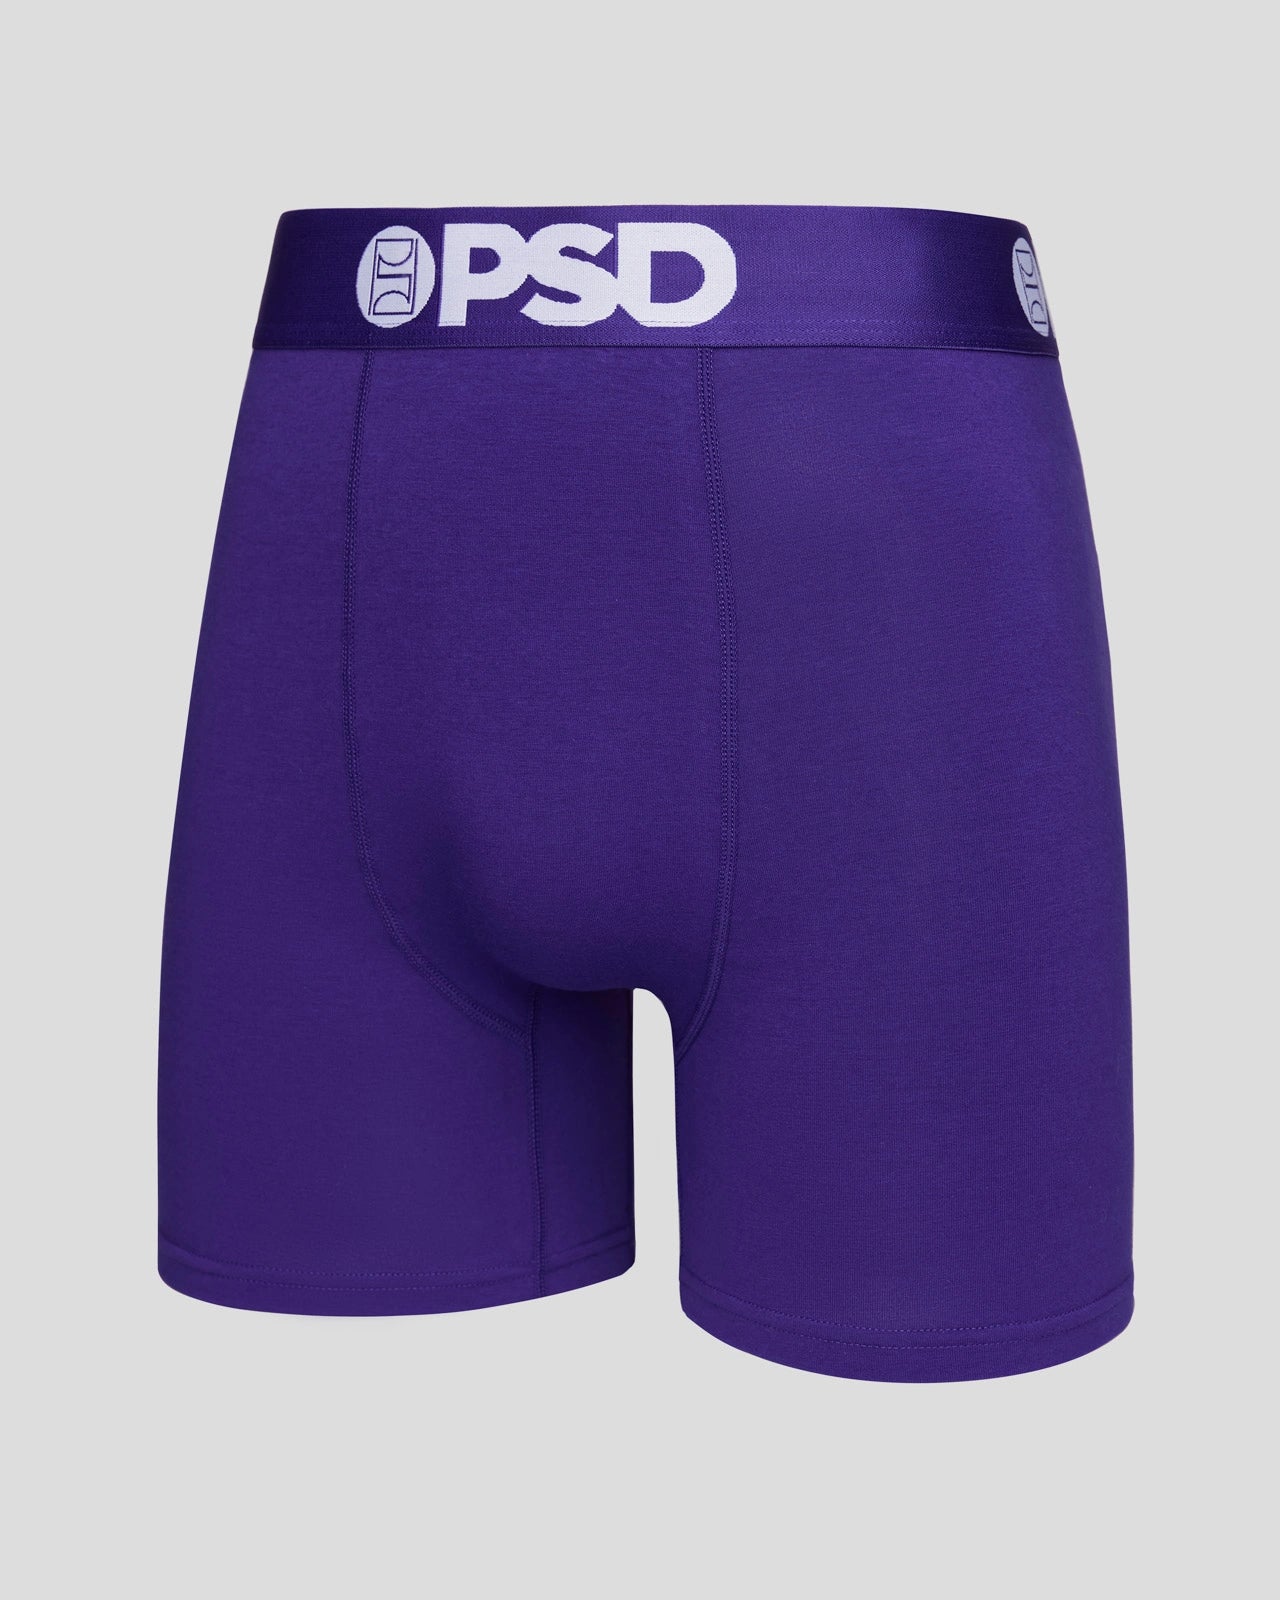 Solids - Dark Purple | Mid Length - Cotton | PSD®